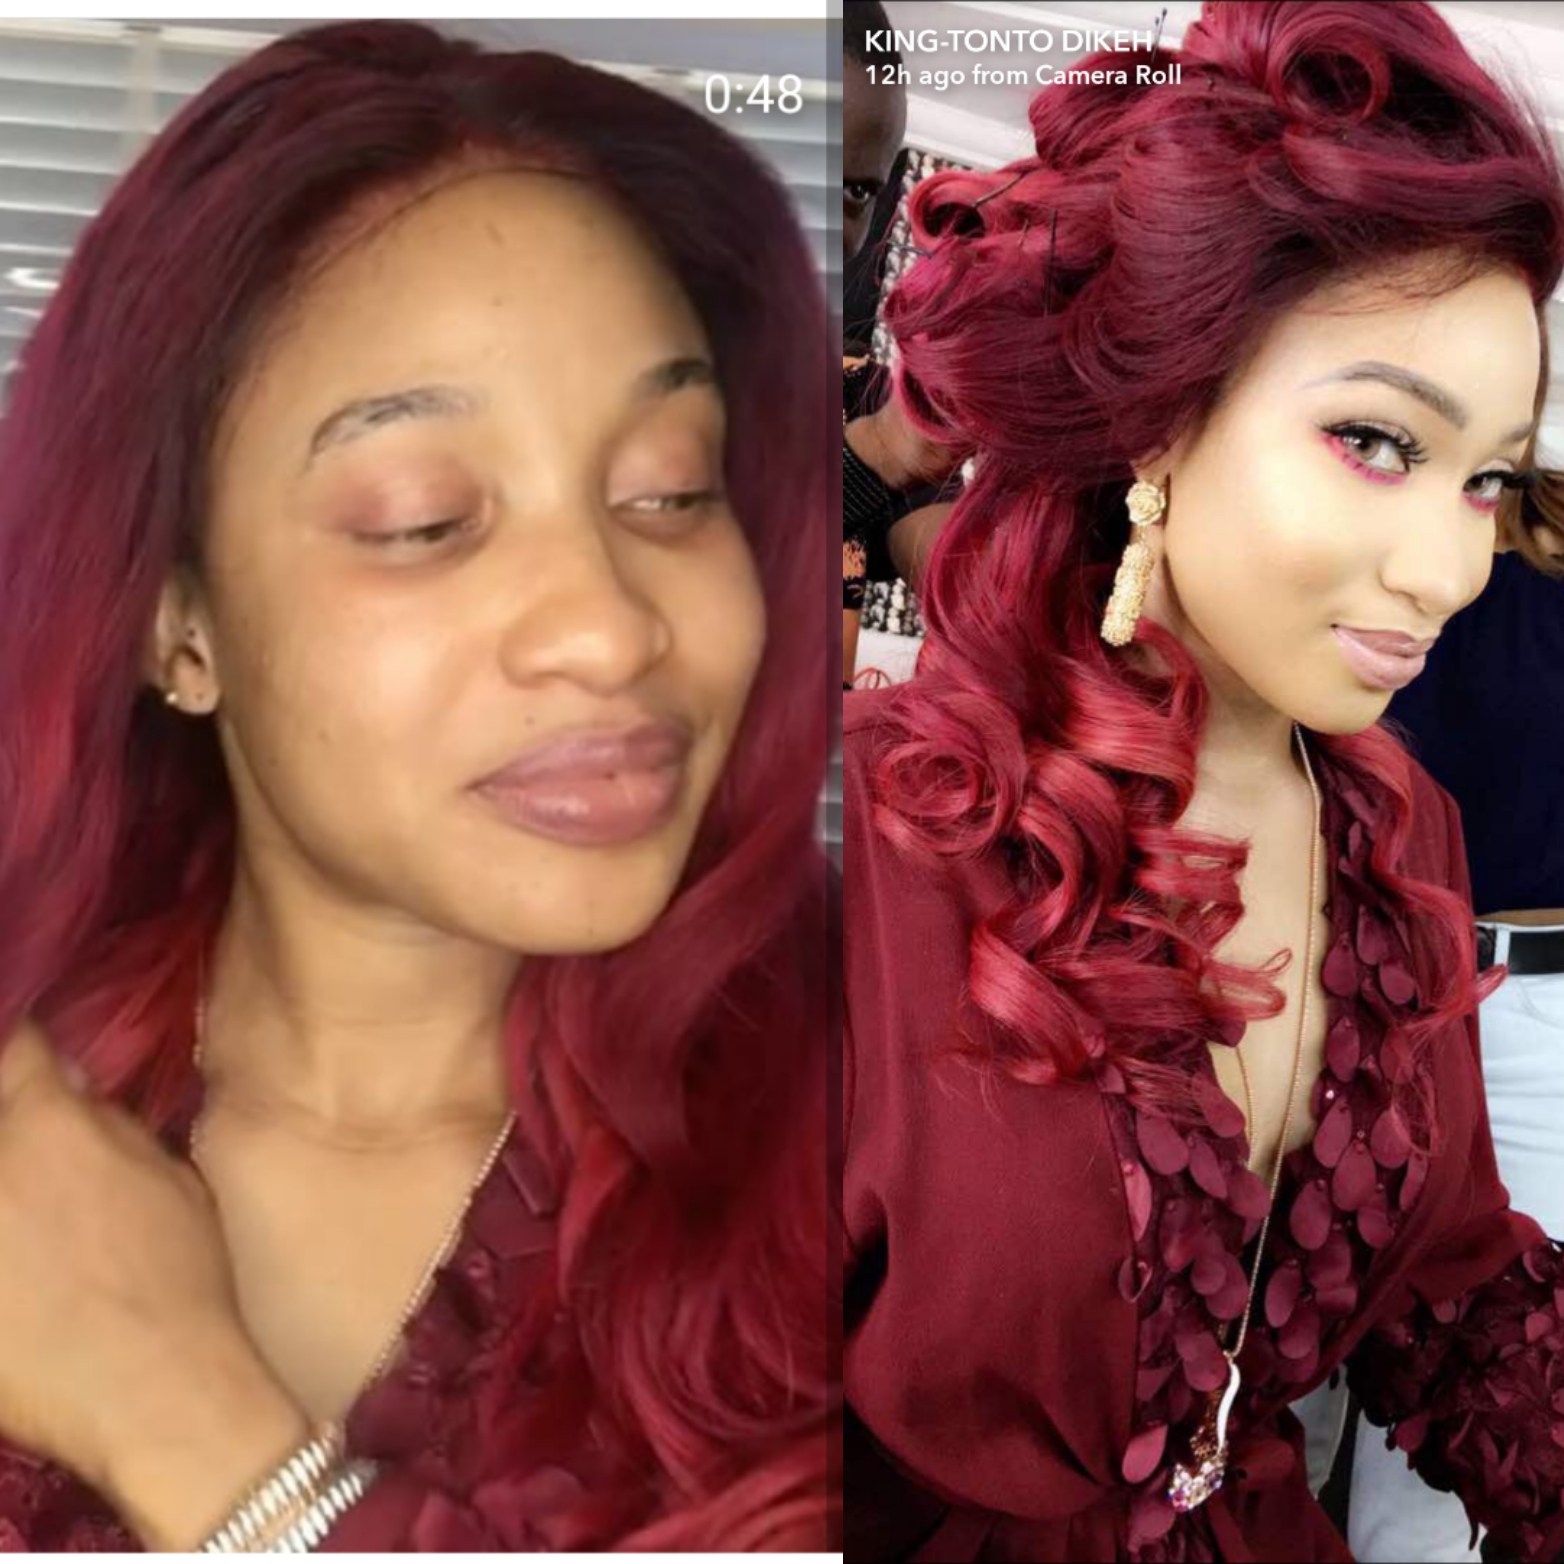 Beautiful before and after make-up photos of Tonto Dikeh